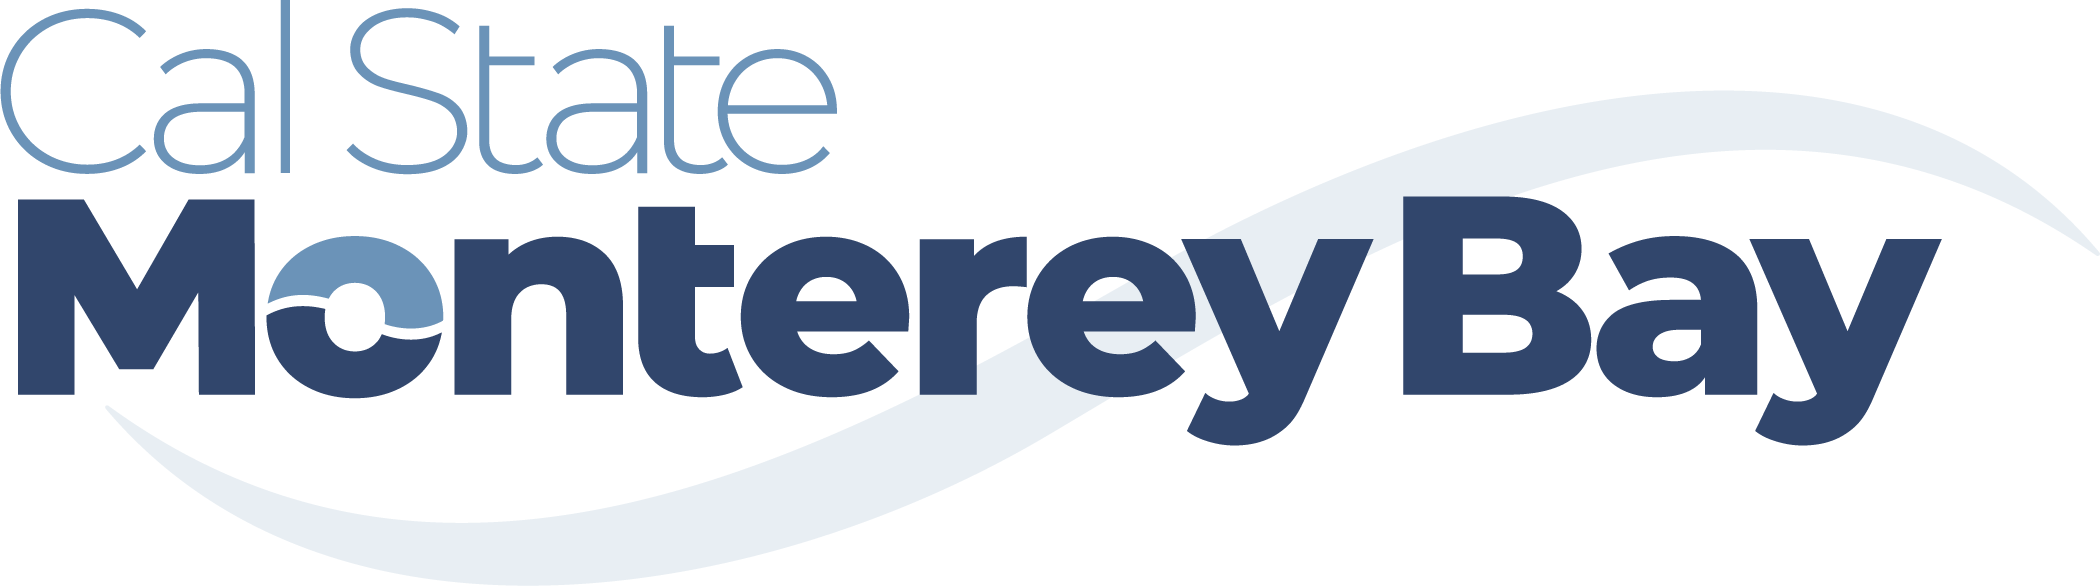 CSU Monterey Bay Logo Image.